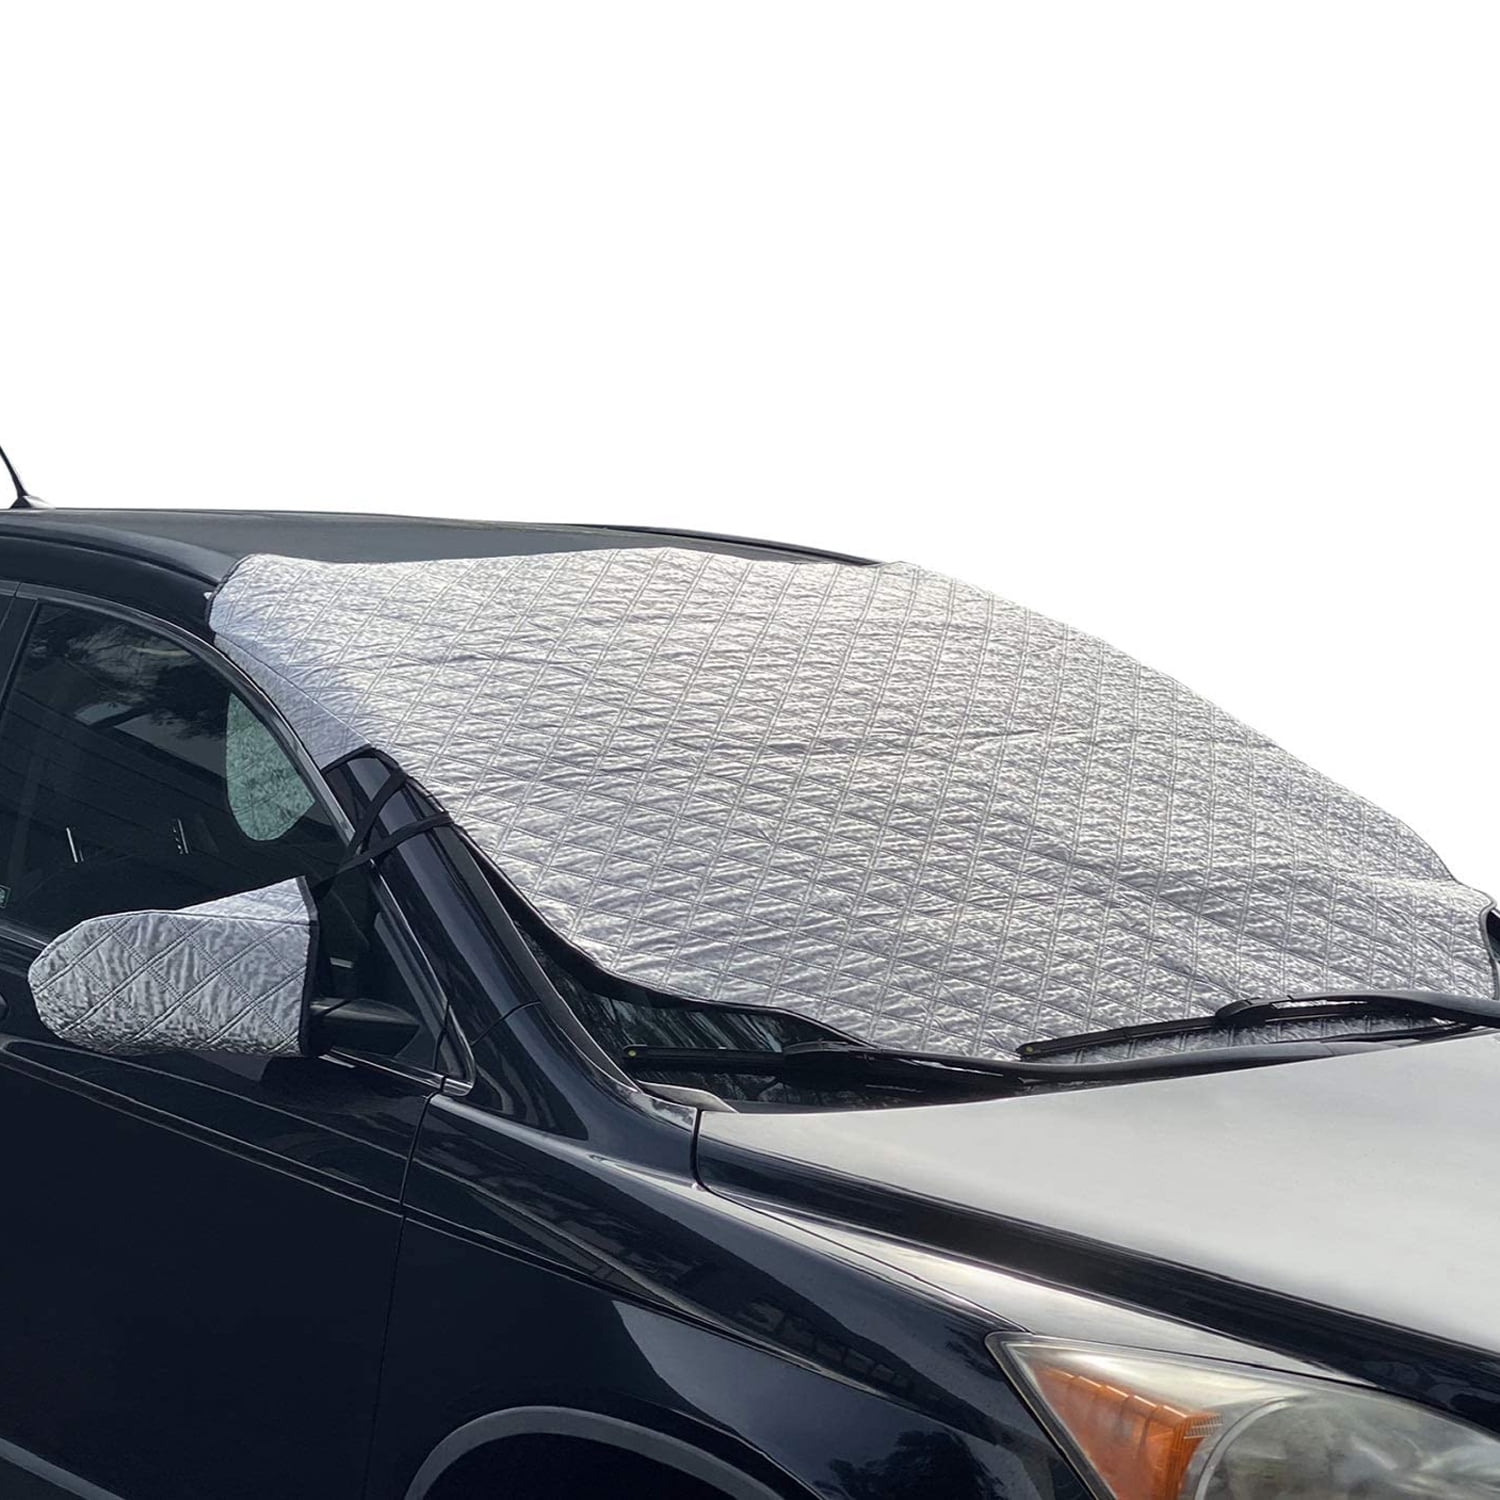 BLAZOR Car Windscreen Cover, Anti-Frost/Snow/Ice in Winter, Anti